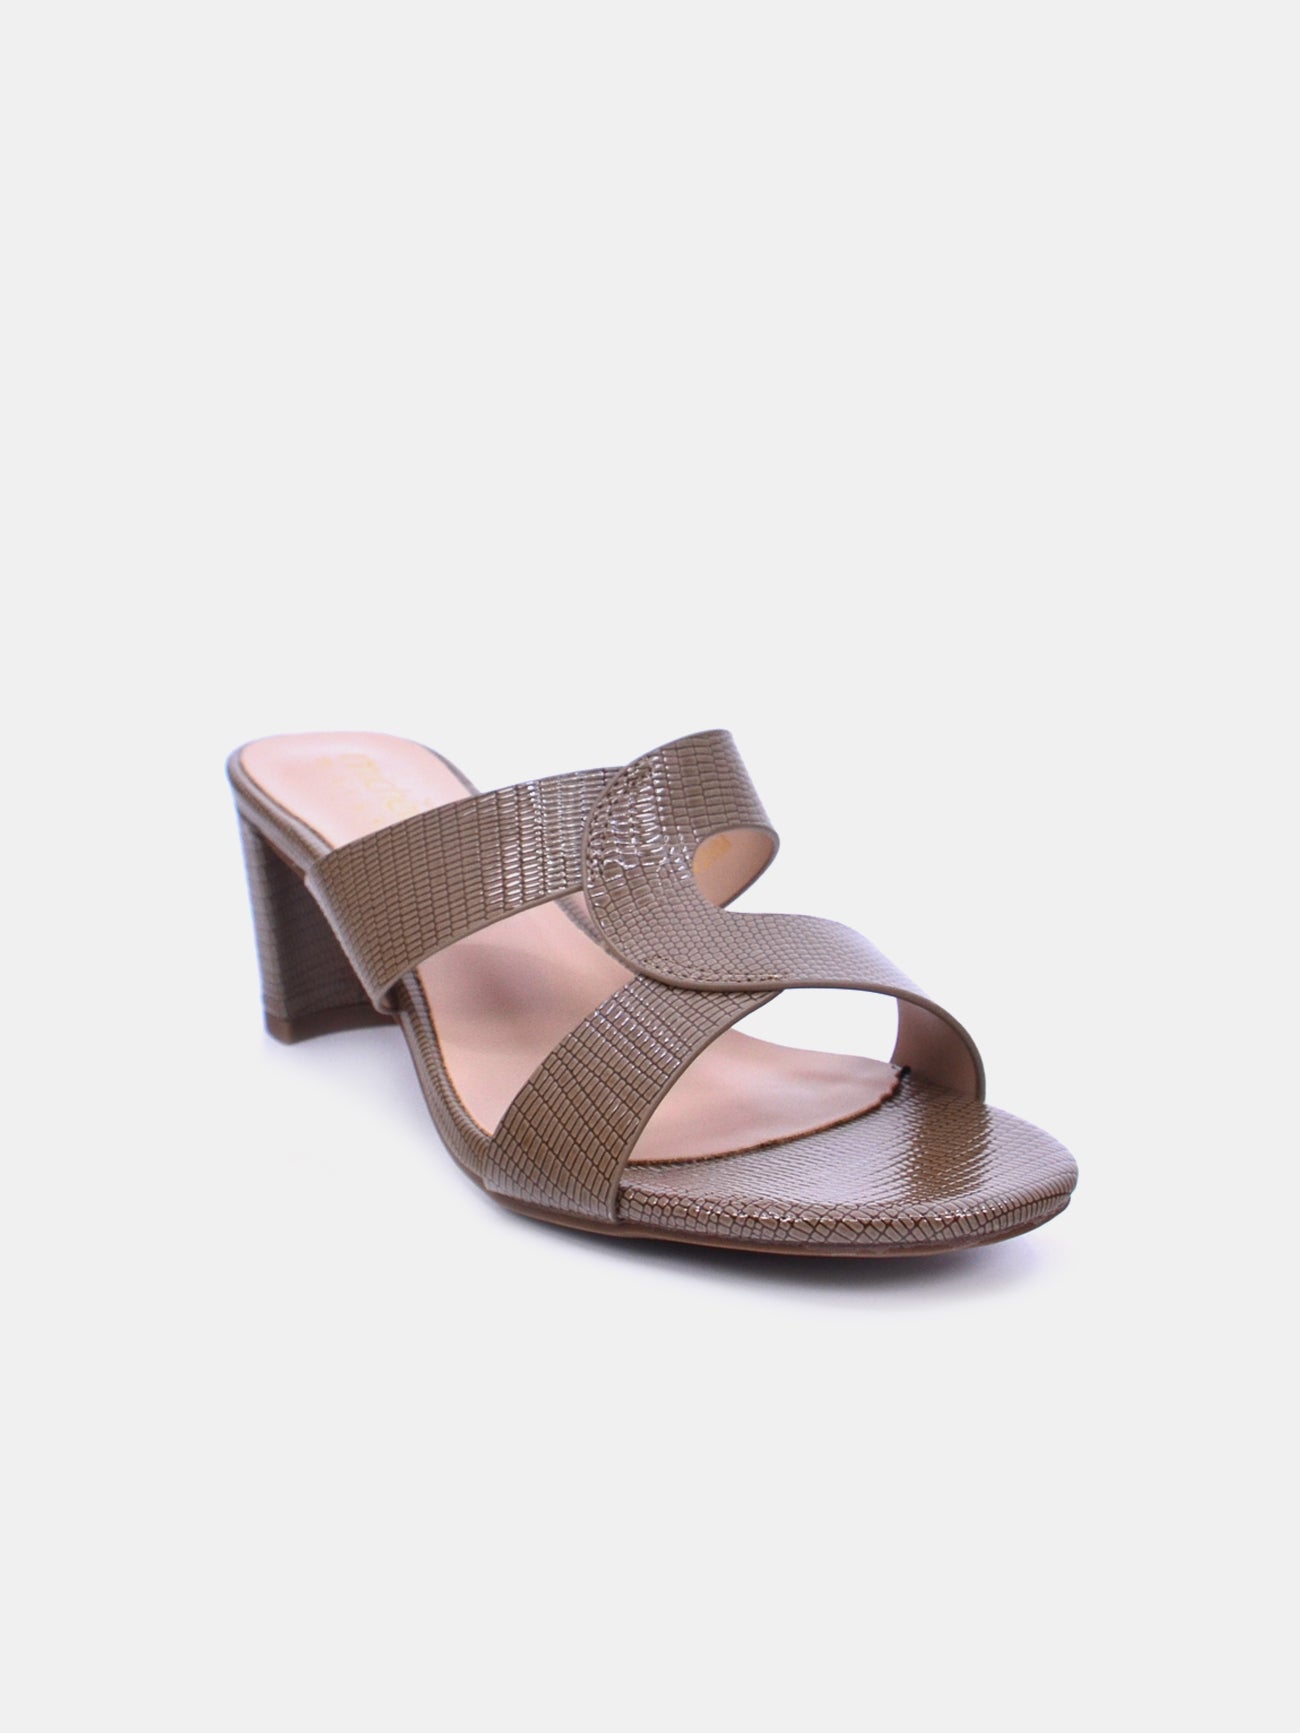 Michelle Morgan 314RJ19C Women's Heeled Sandals #color_Brown